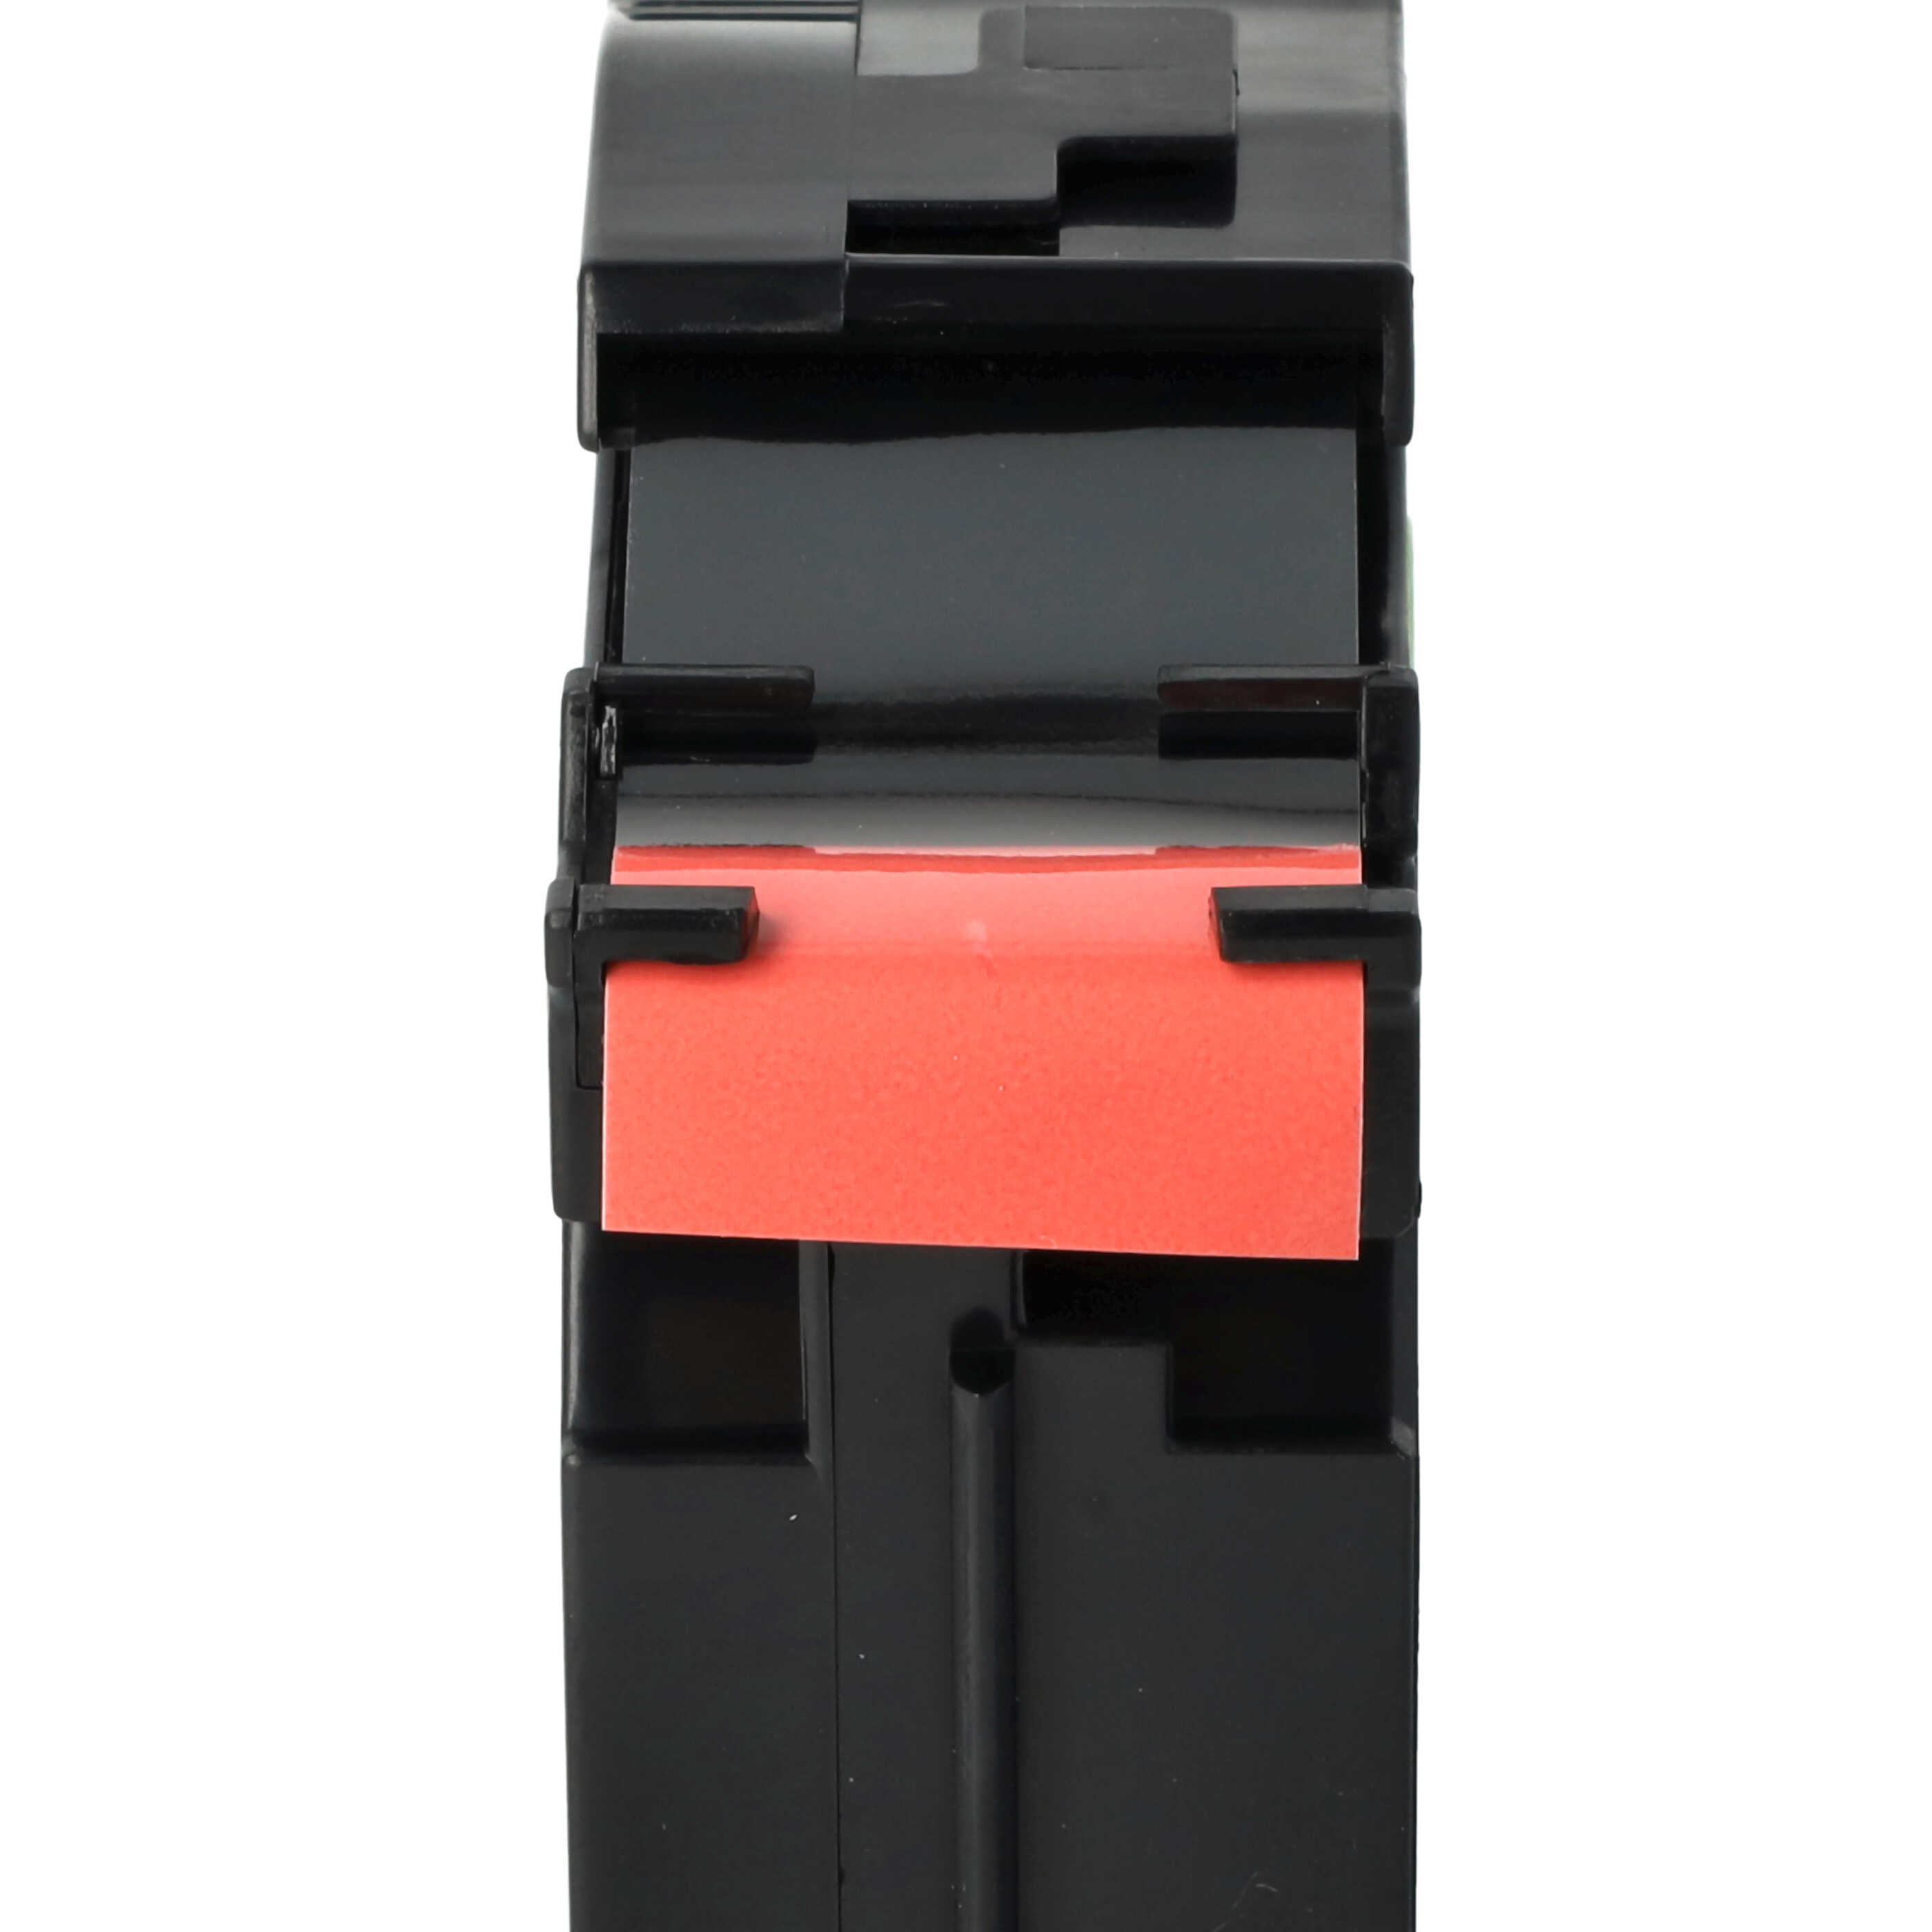 Casete cinta escritura reemplaza Brother TZFX451, TZeFX451, TZ-FX451, TZE-FX451 Negro su Rojo